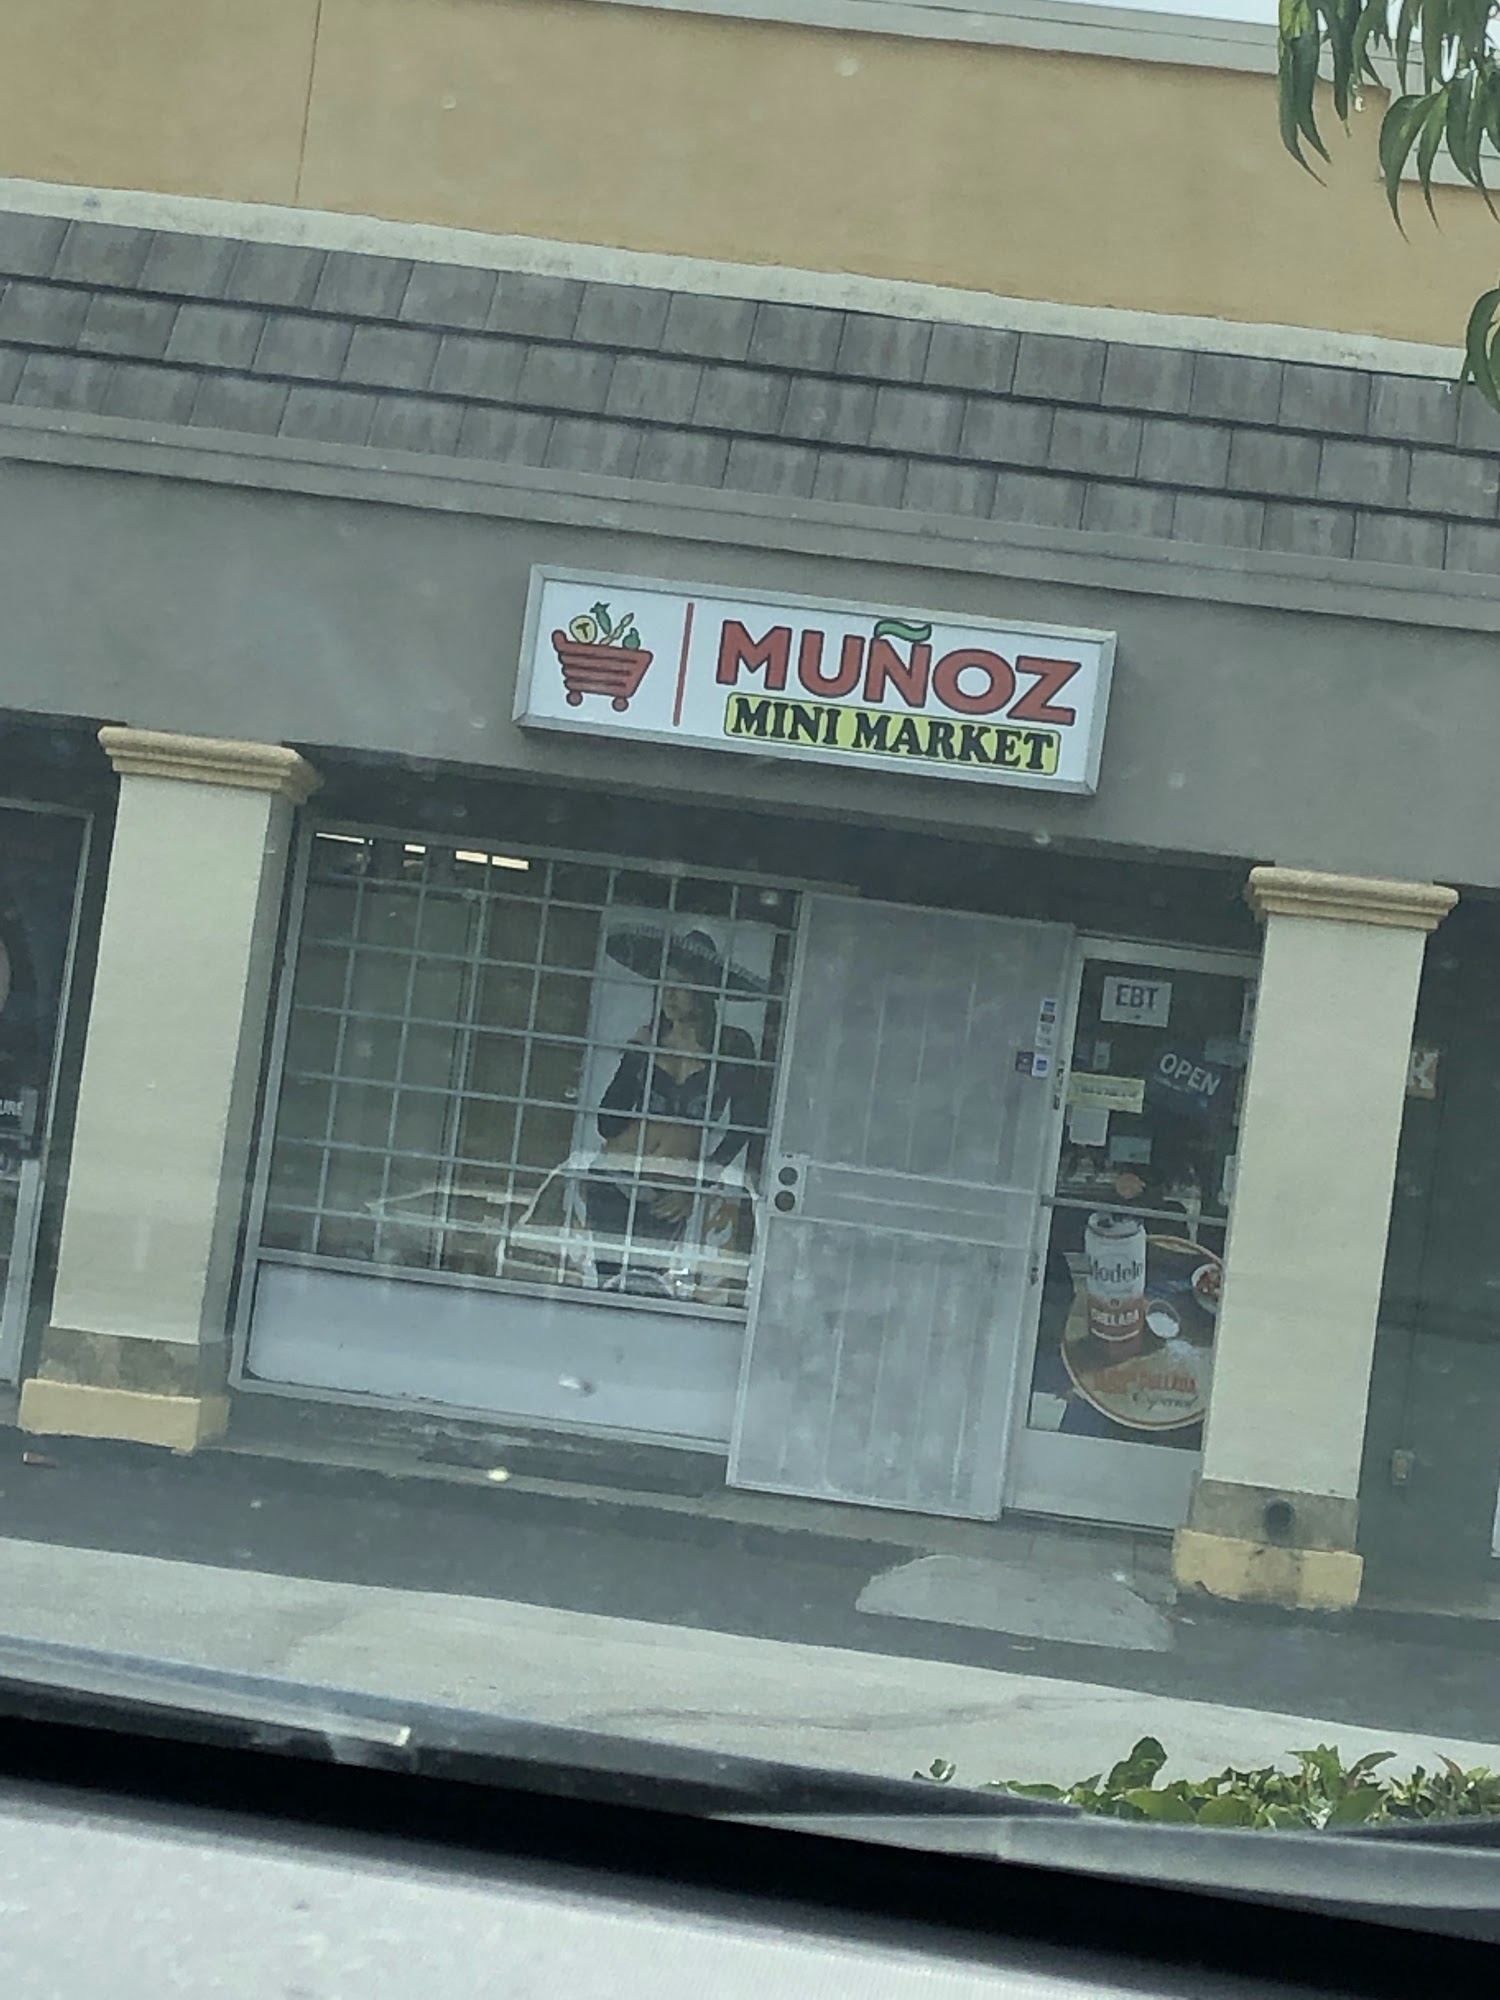 Munoz Mini Market